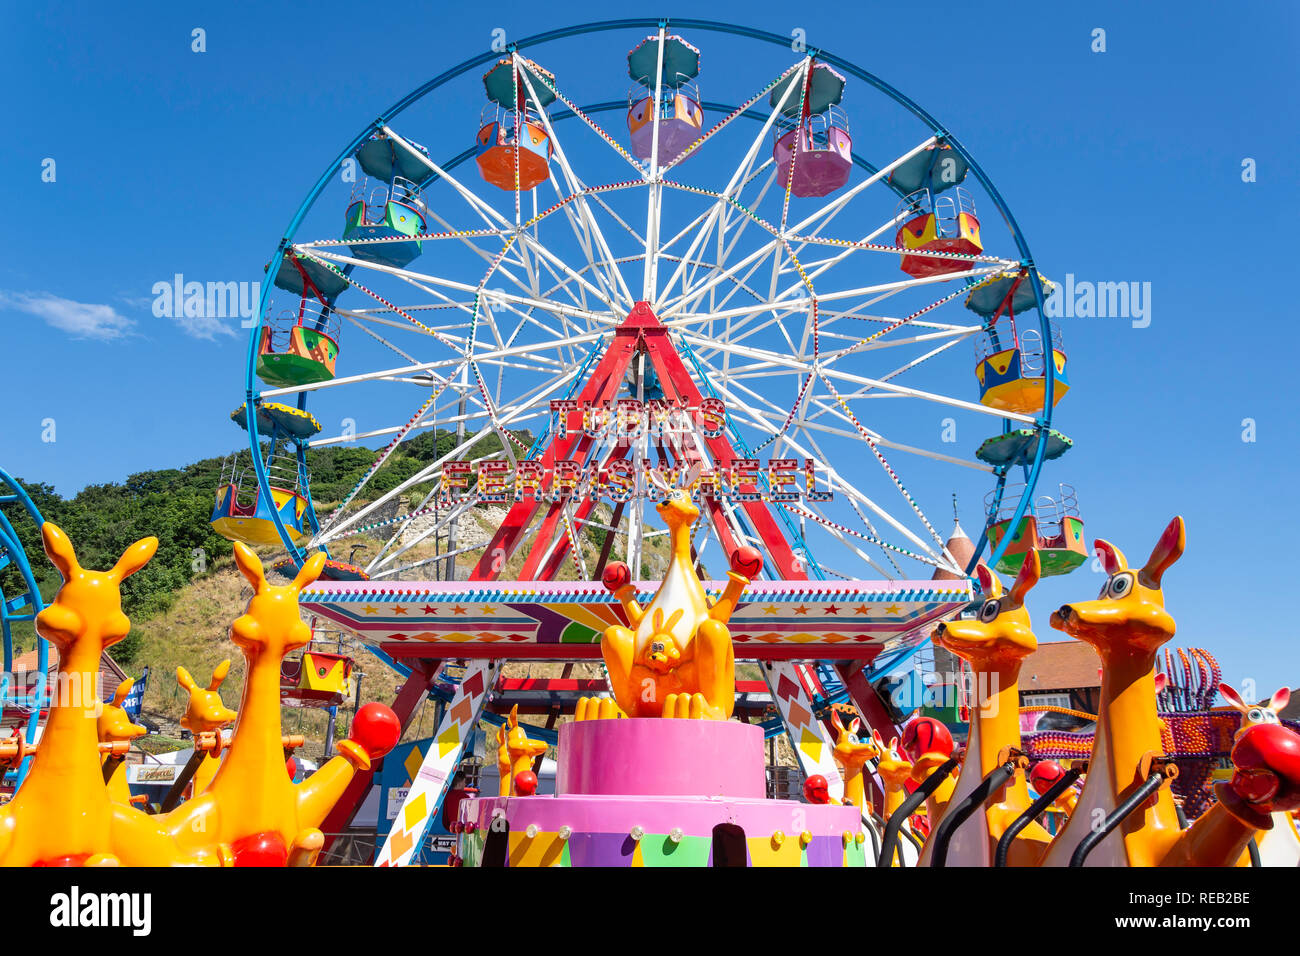 Ferris wheel at Luna Park amusement park, Marine Drive, Scarborough, North Yorkshire, England, United Kingdom Stock Photo